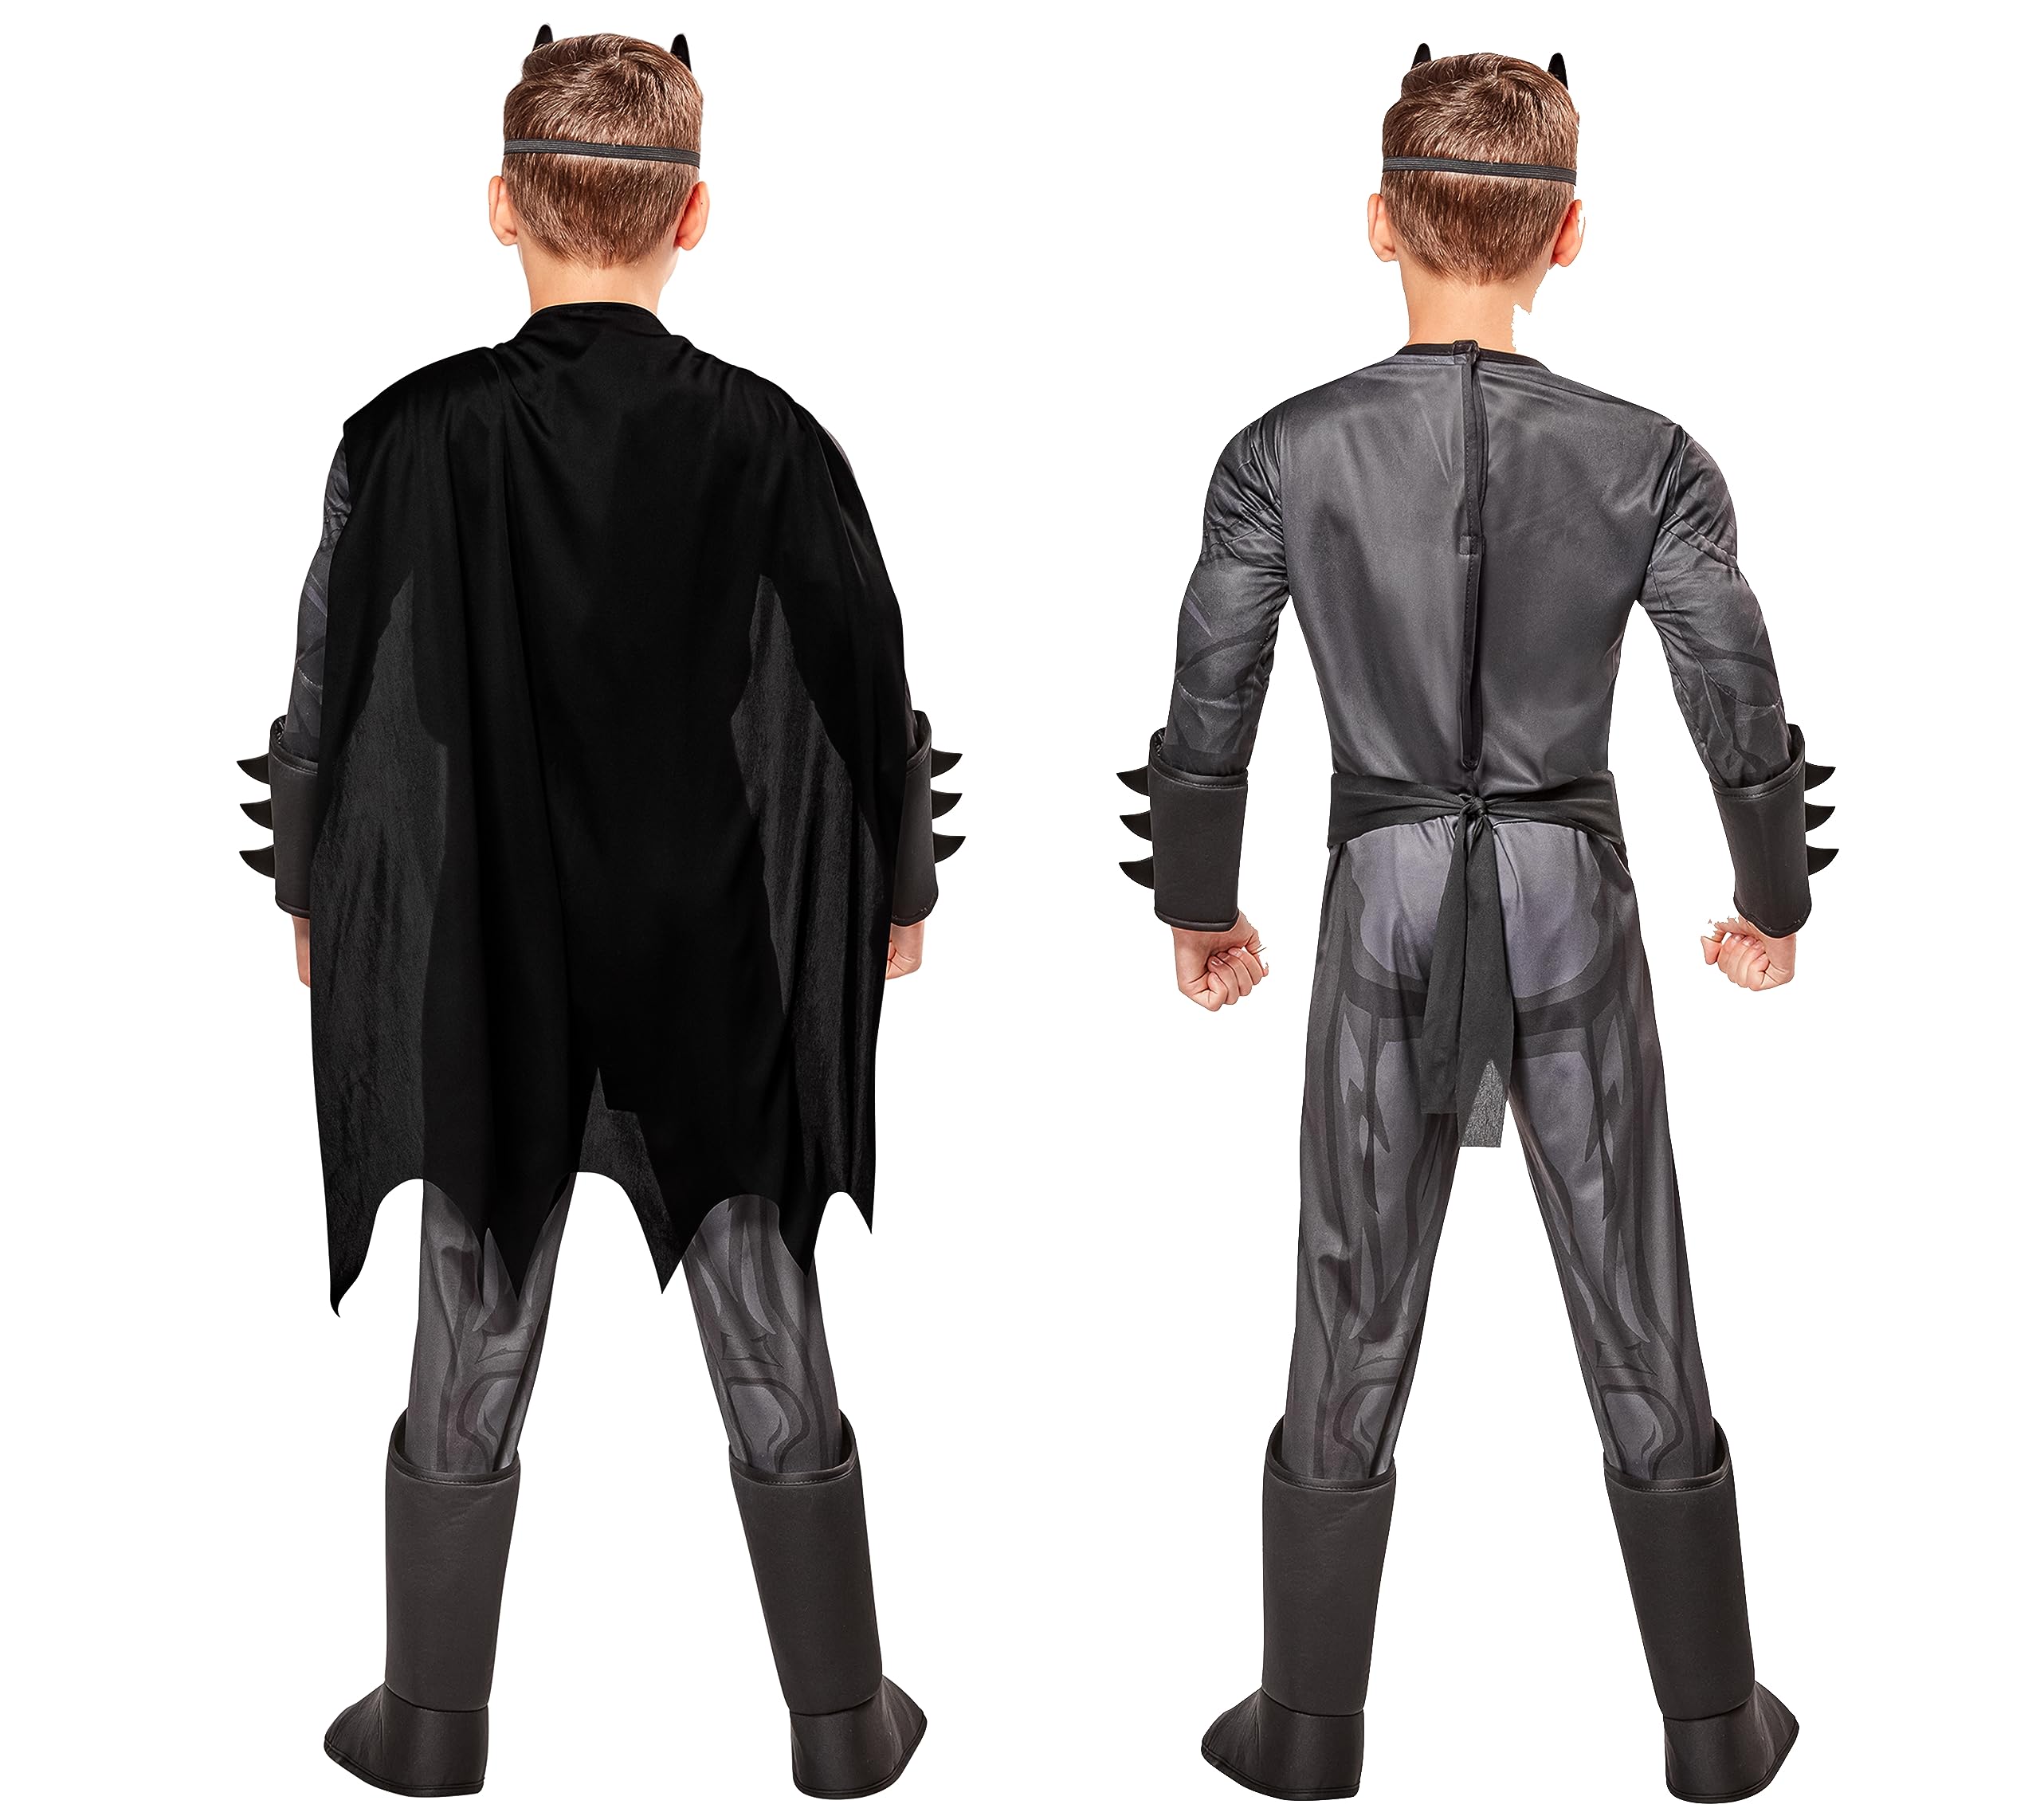 Rubie's Costume Boys DC Comics Deluxe Batman Costume